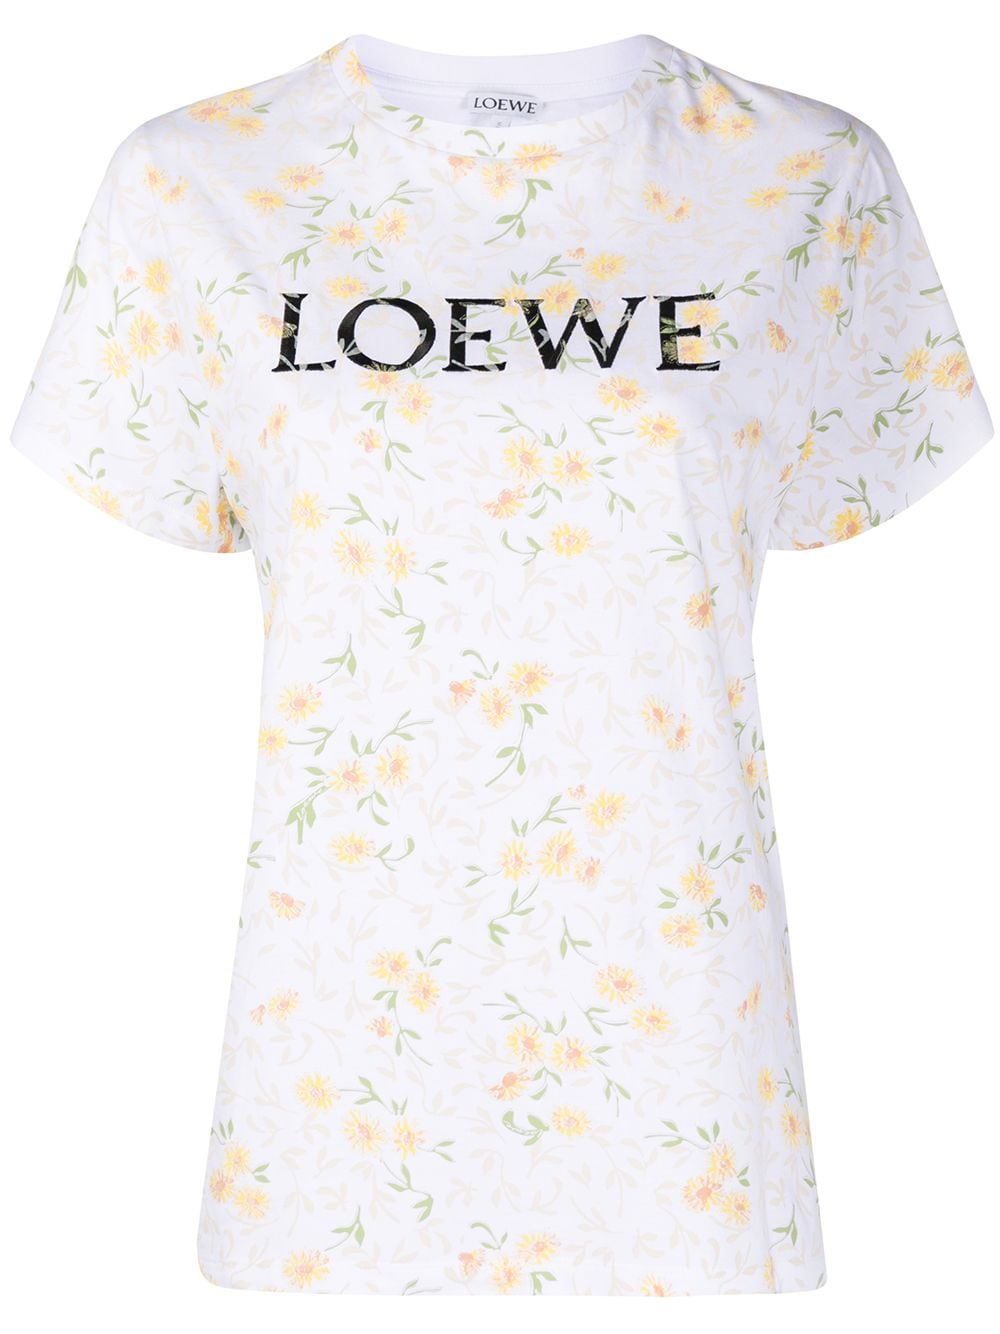 loewe flower t shirt